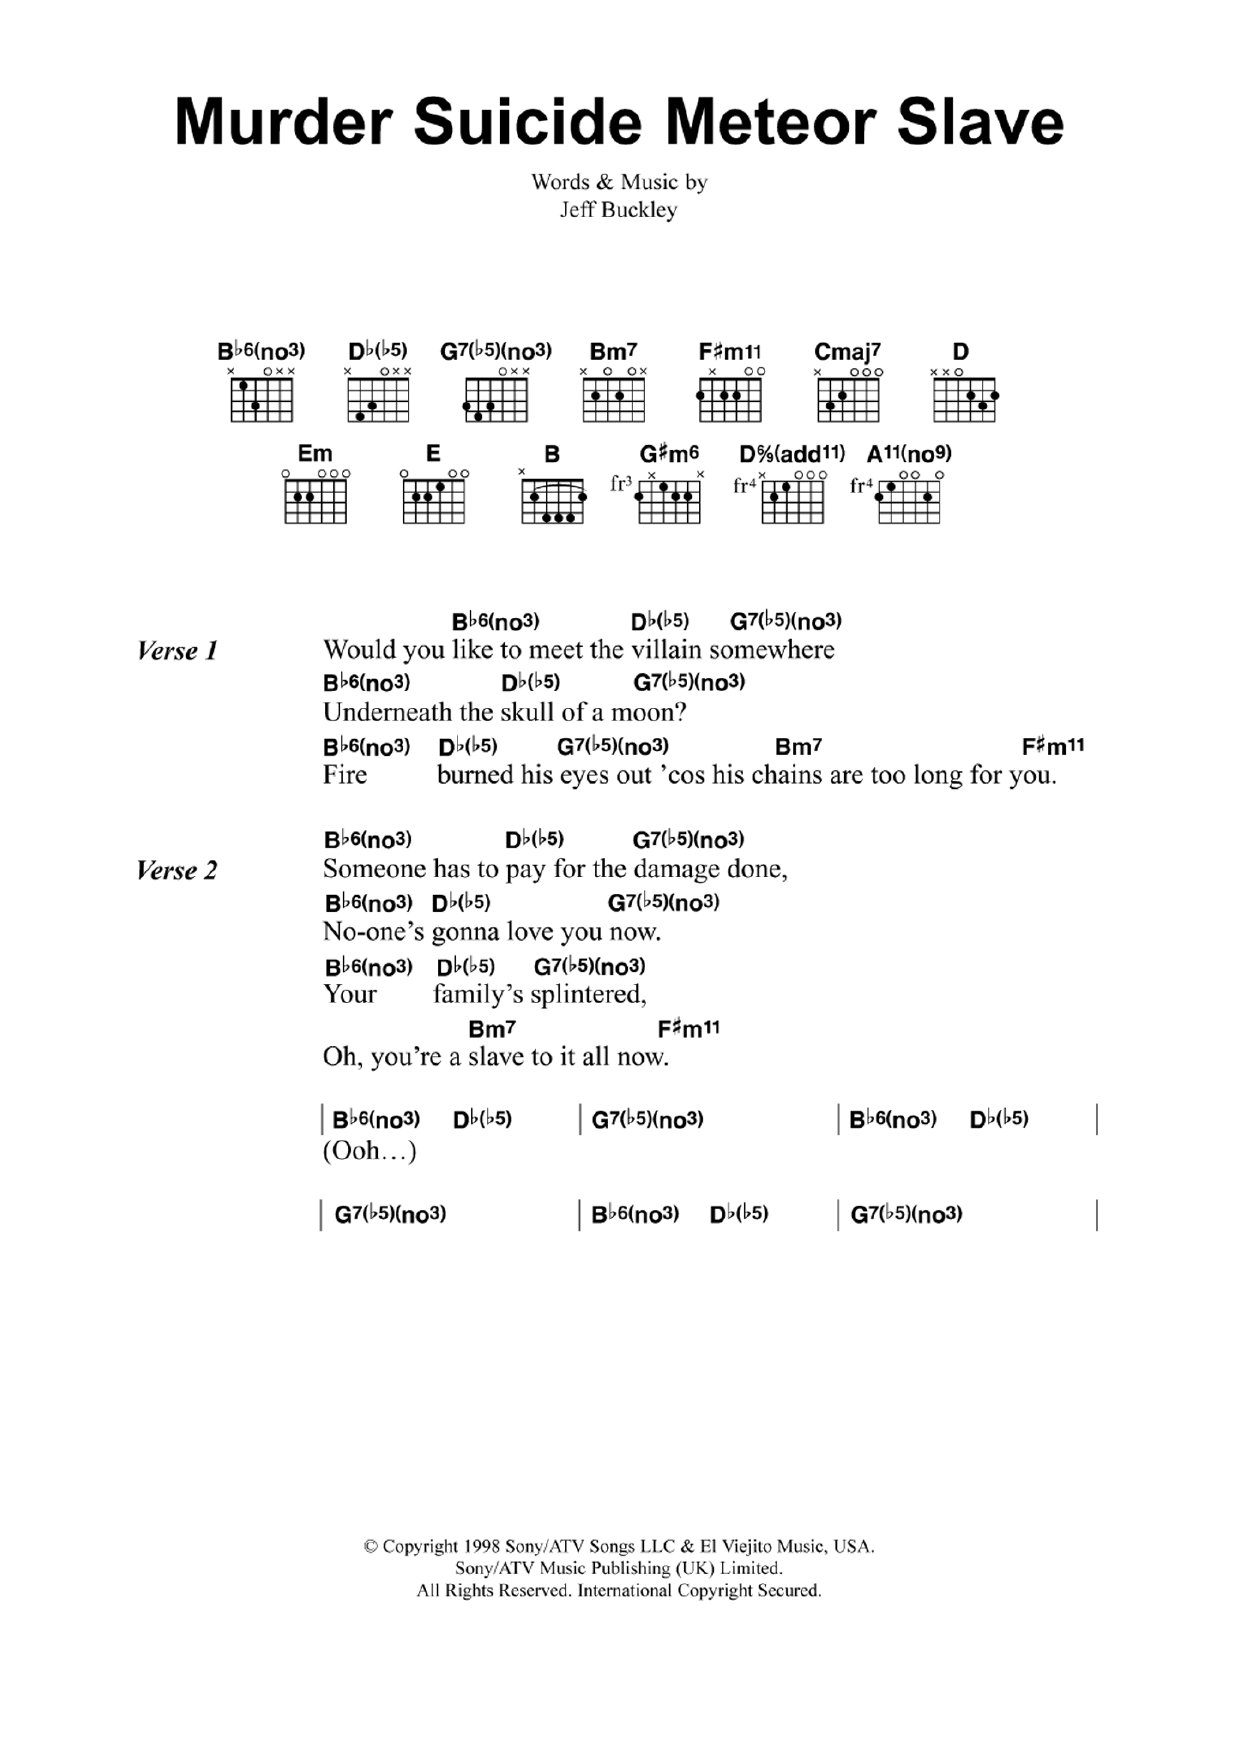 Jeff Buckley Murder Suicide Meteor Slave Sheet Music Notes & Chords for Guitar Chords/Lyrics - Download or Print PDF